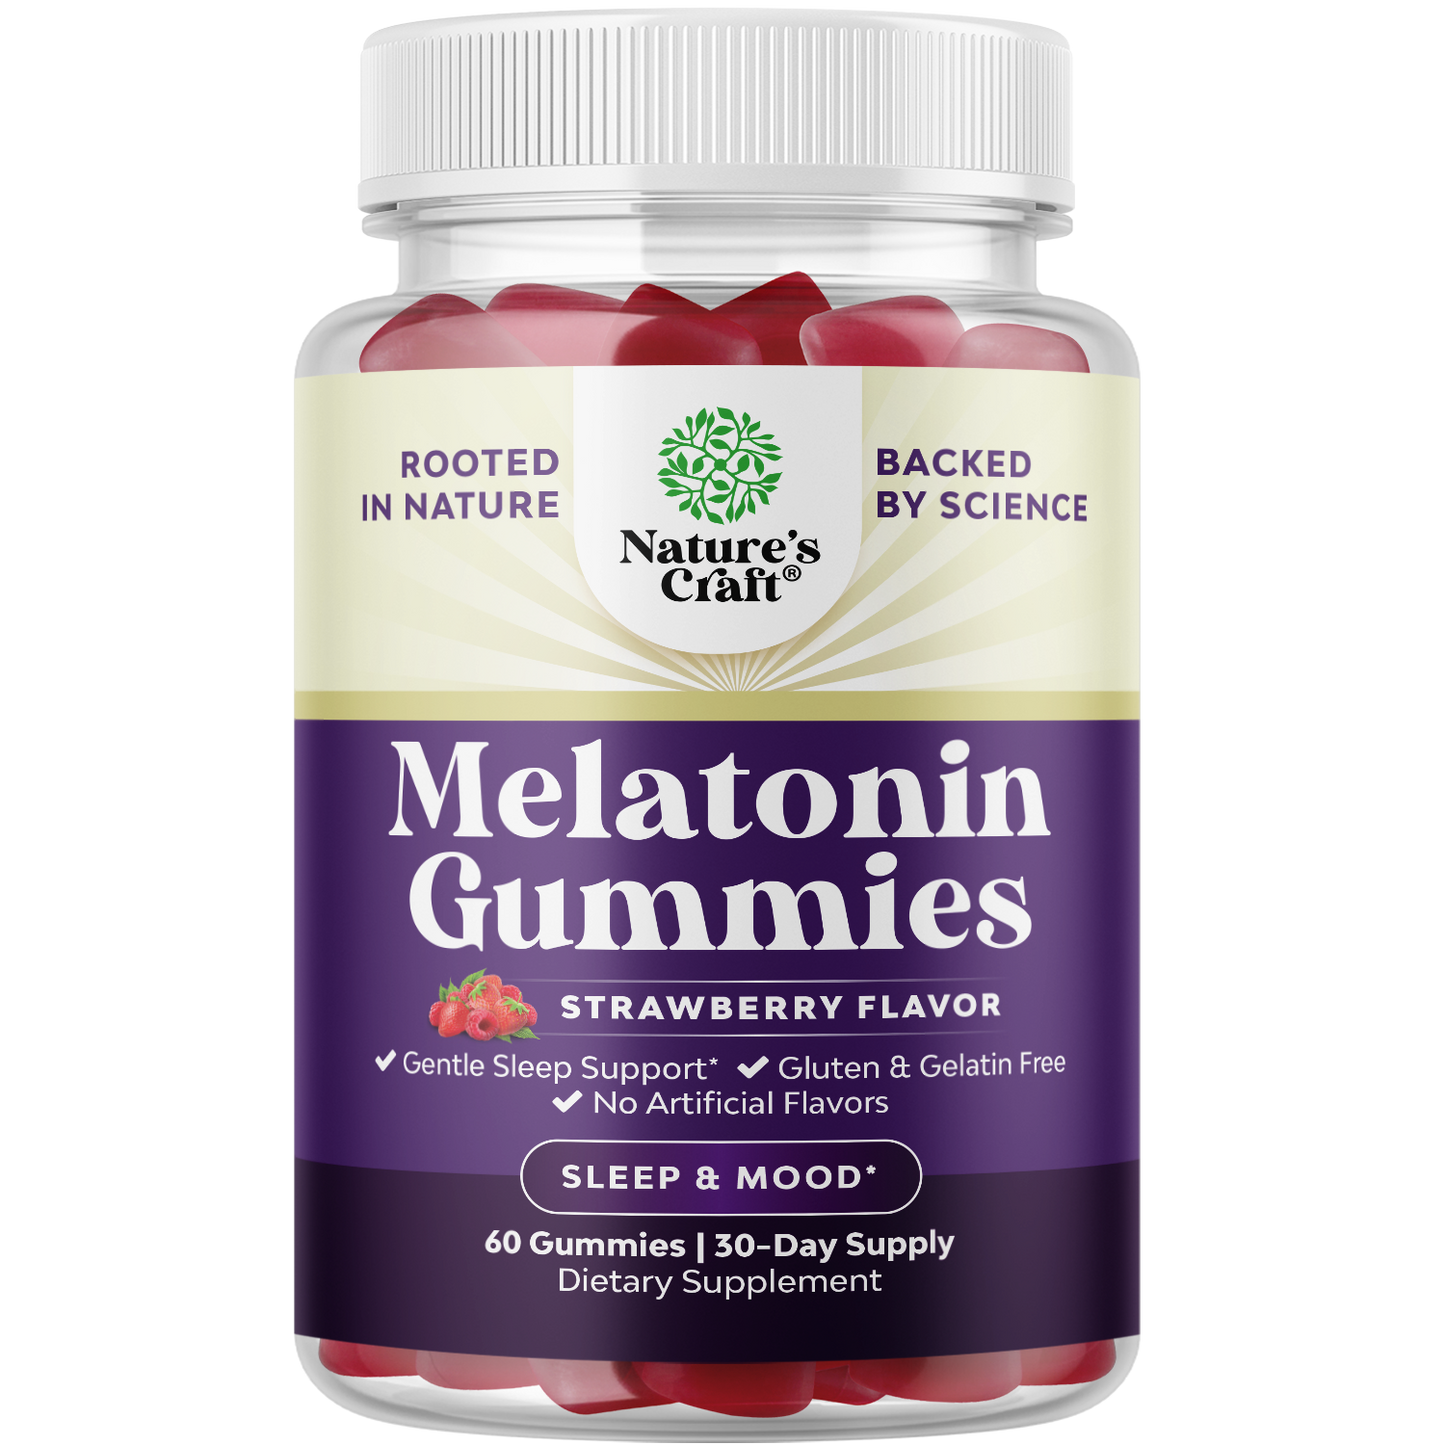 Melatonin Gummies - Strawberry flavor